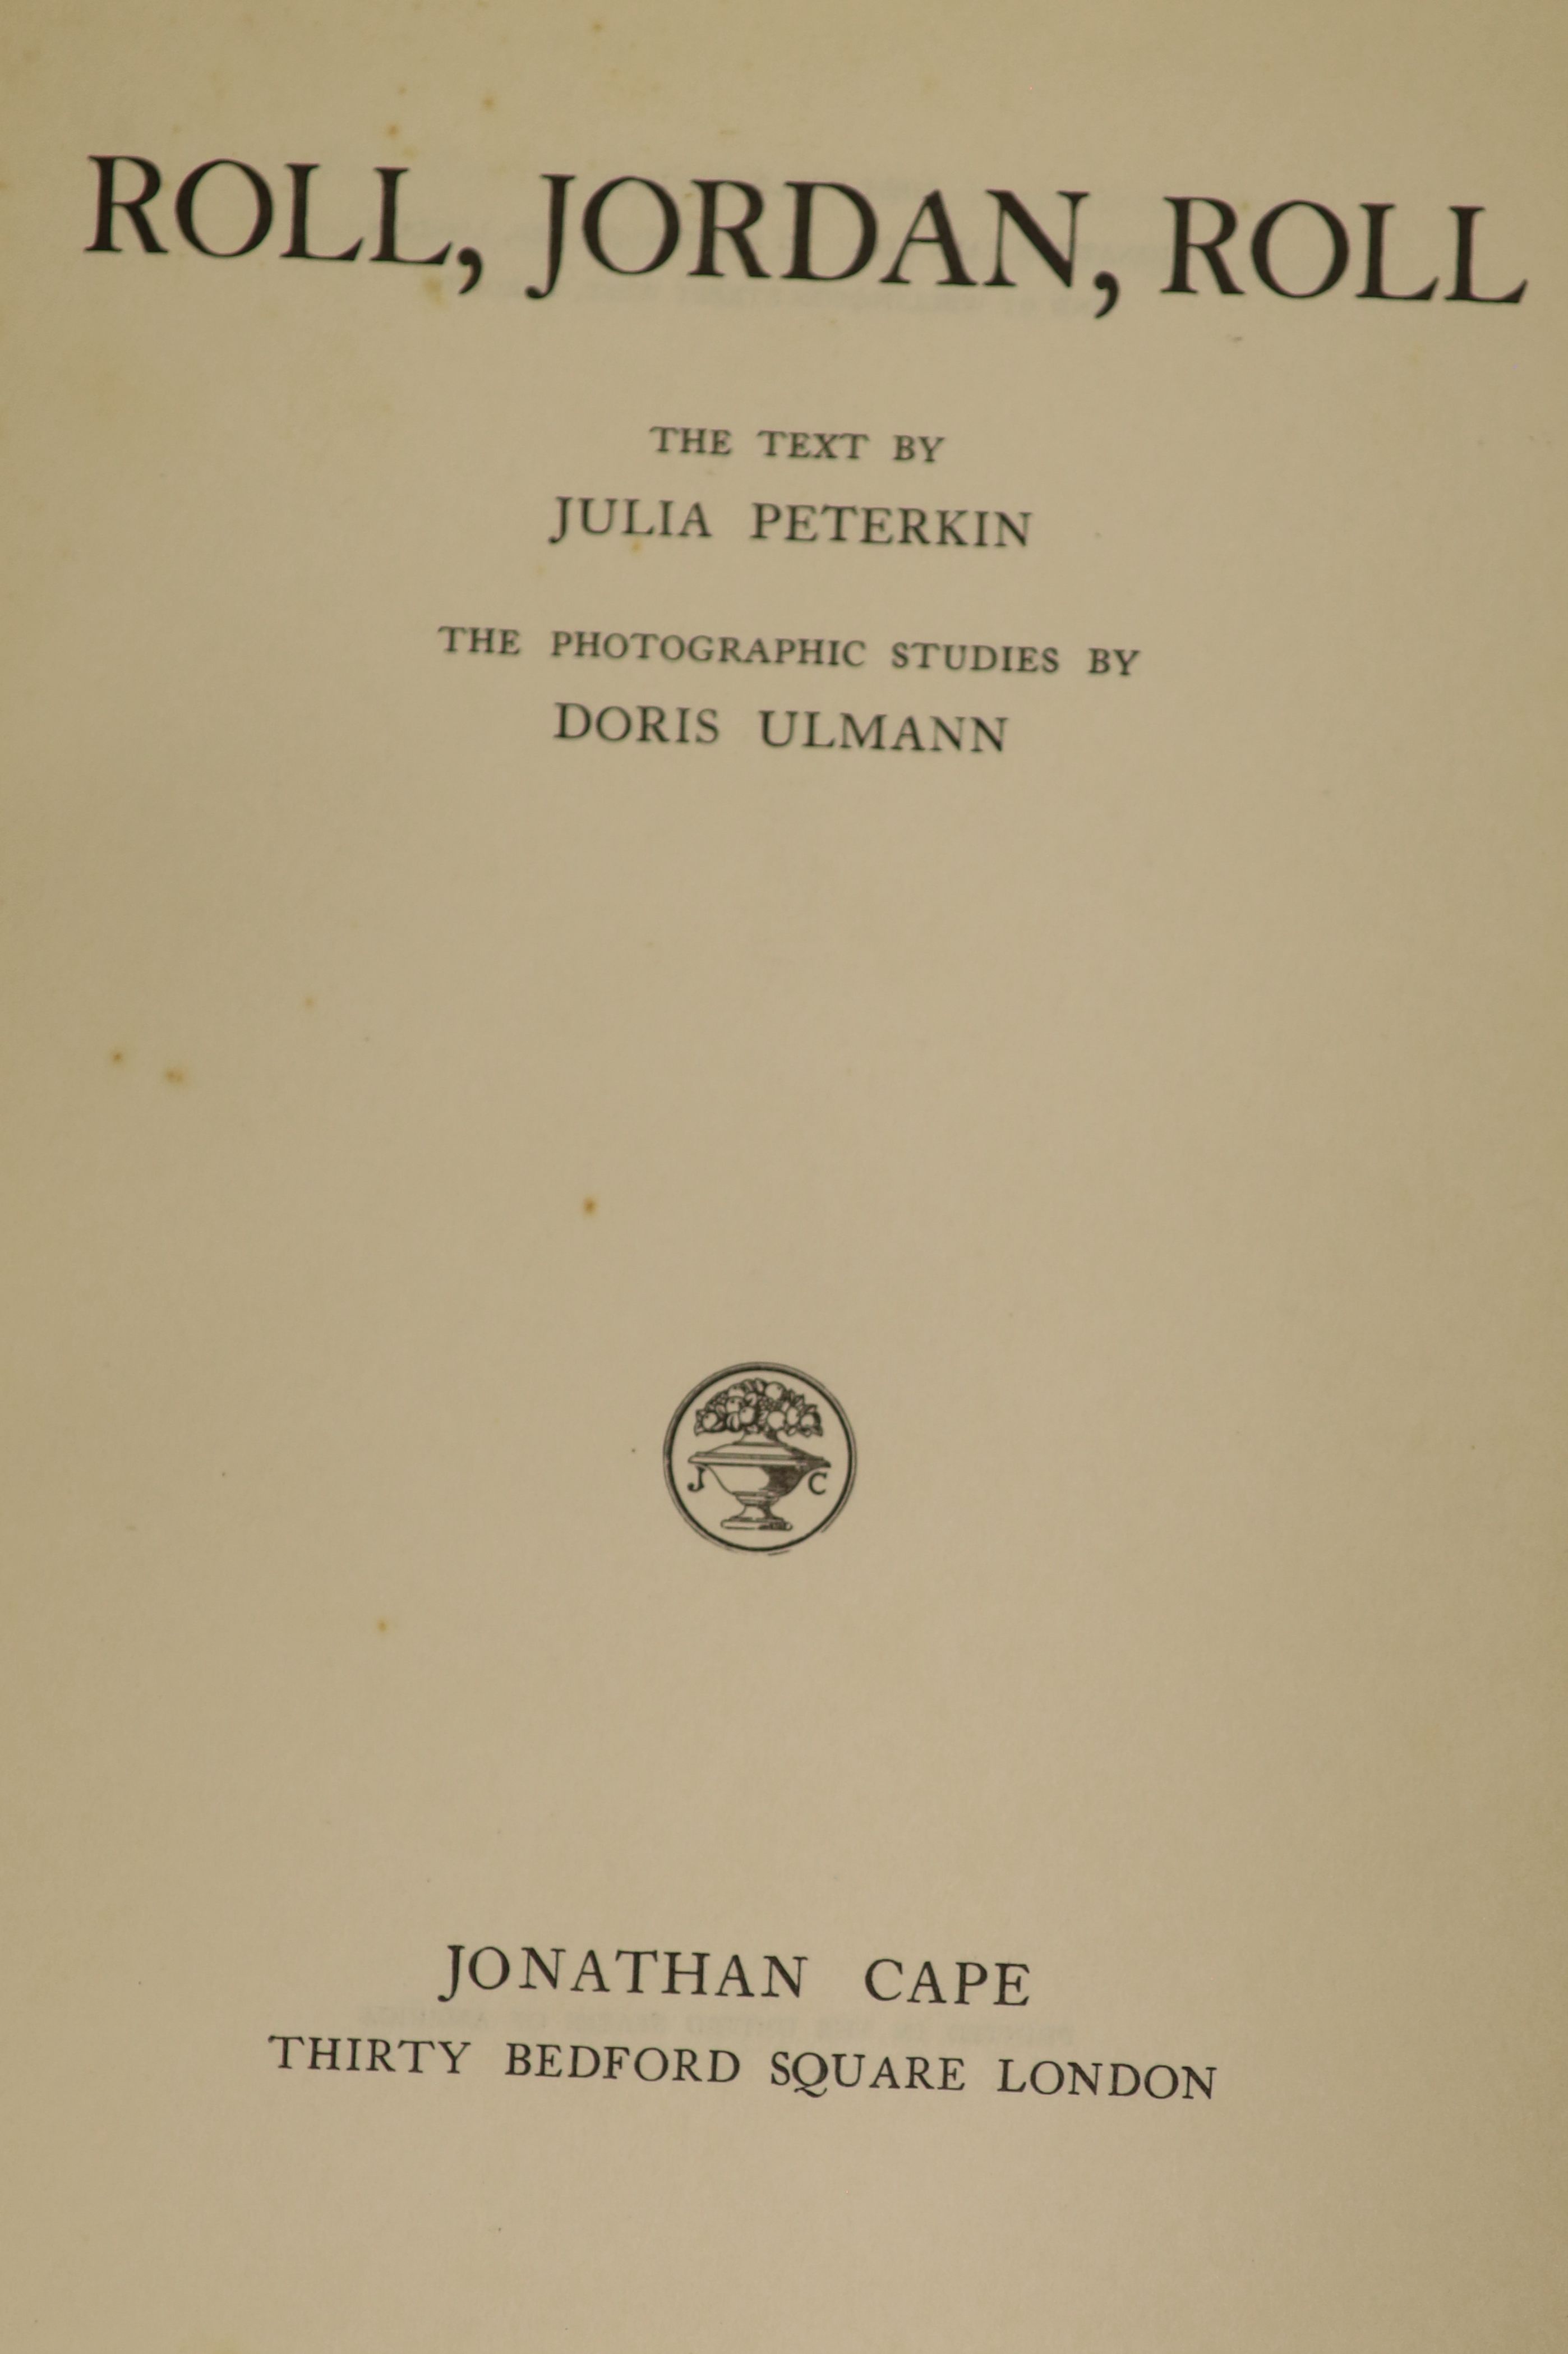 Peterkin, Julia - Roll, Jorda, Roll, photographs by Doris Ulman, 8vo, cloth, Jonathan Cape, London, 1934